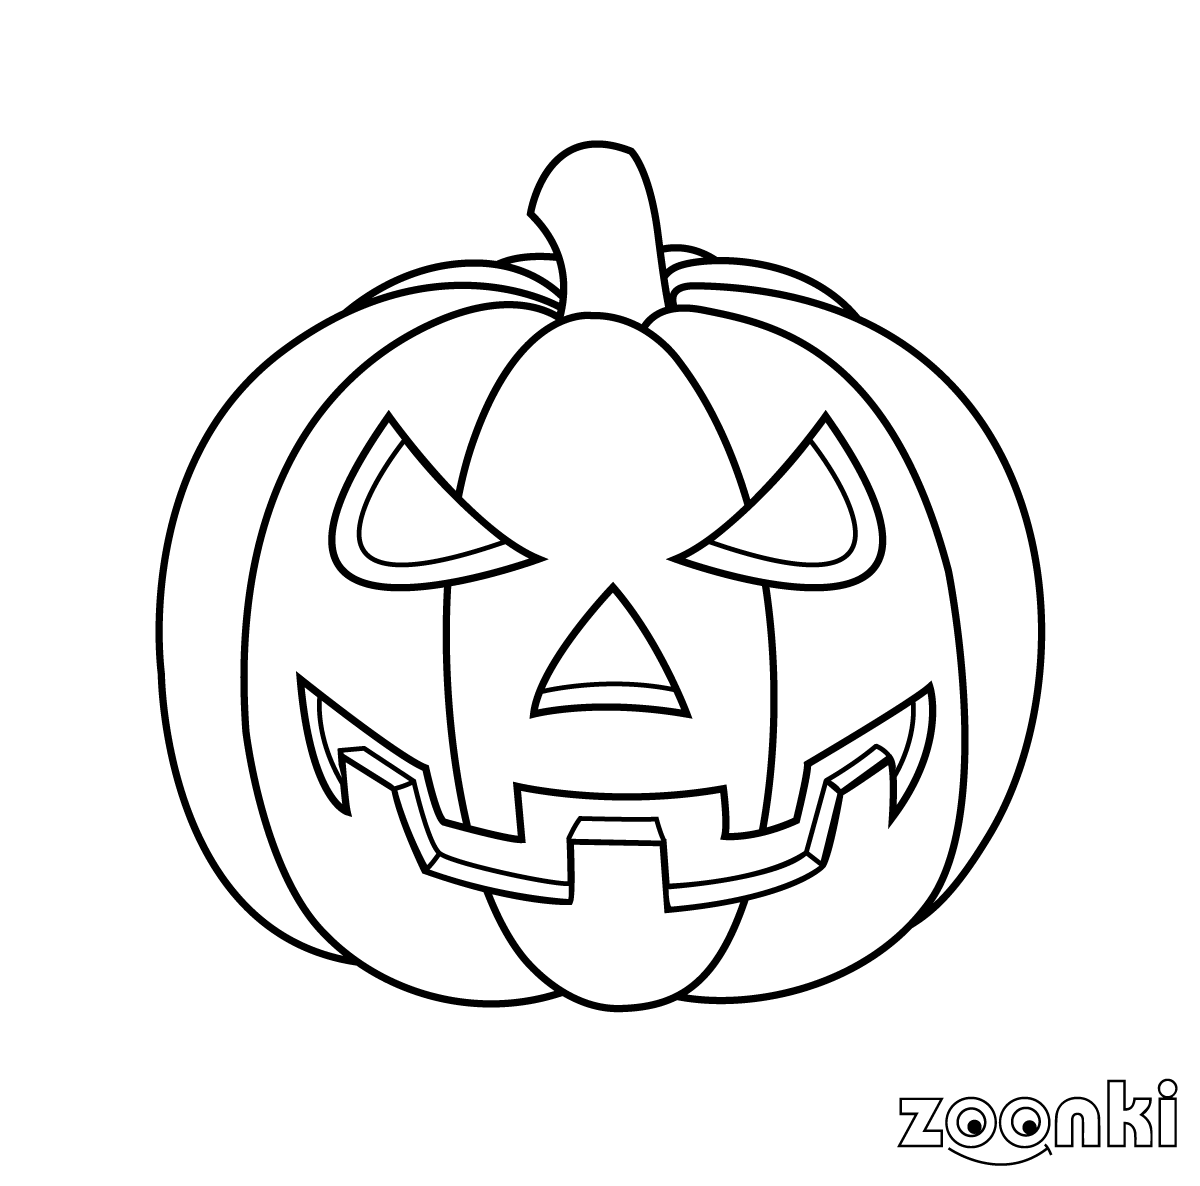 zoonki black & white halloween pumpkin for coloring